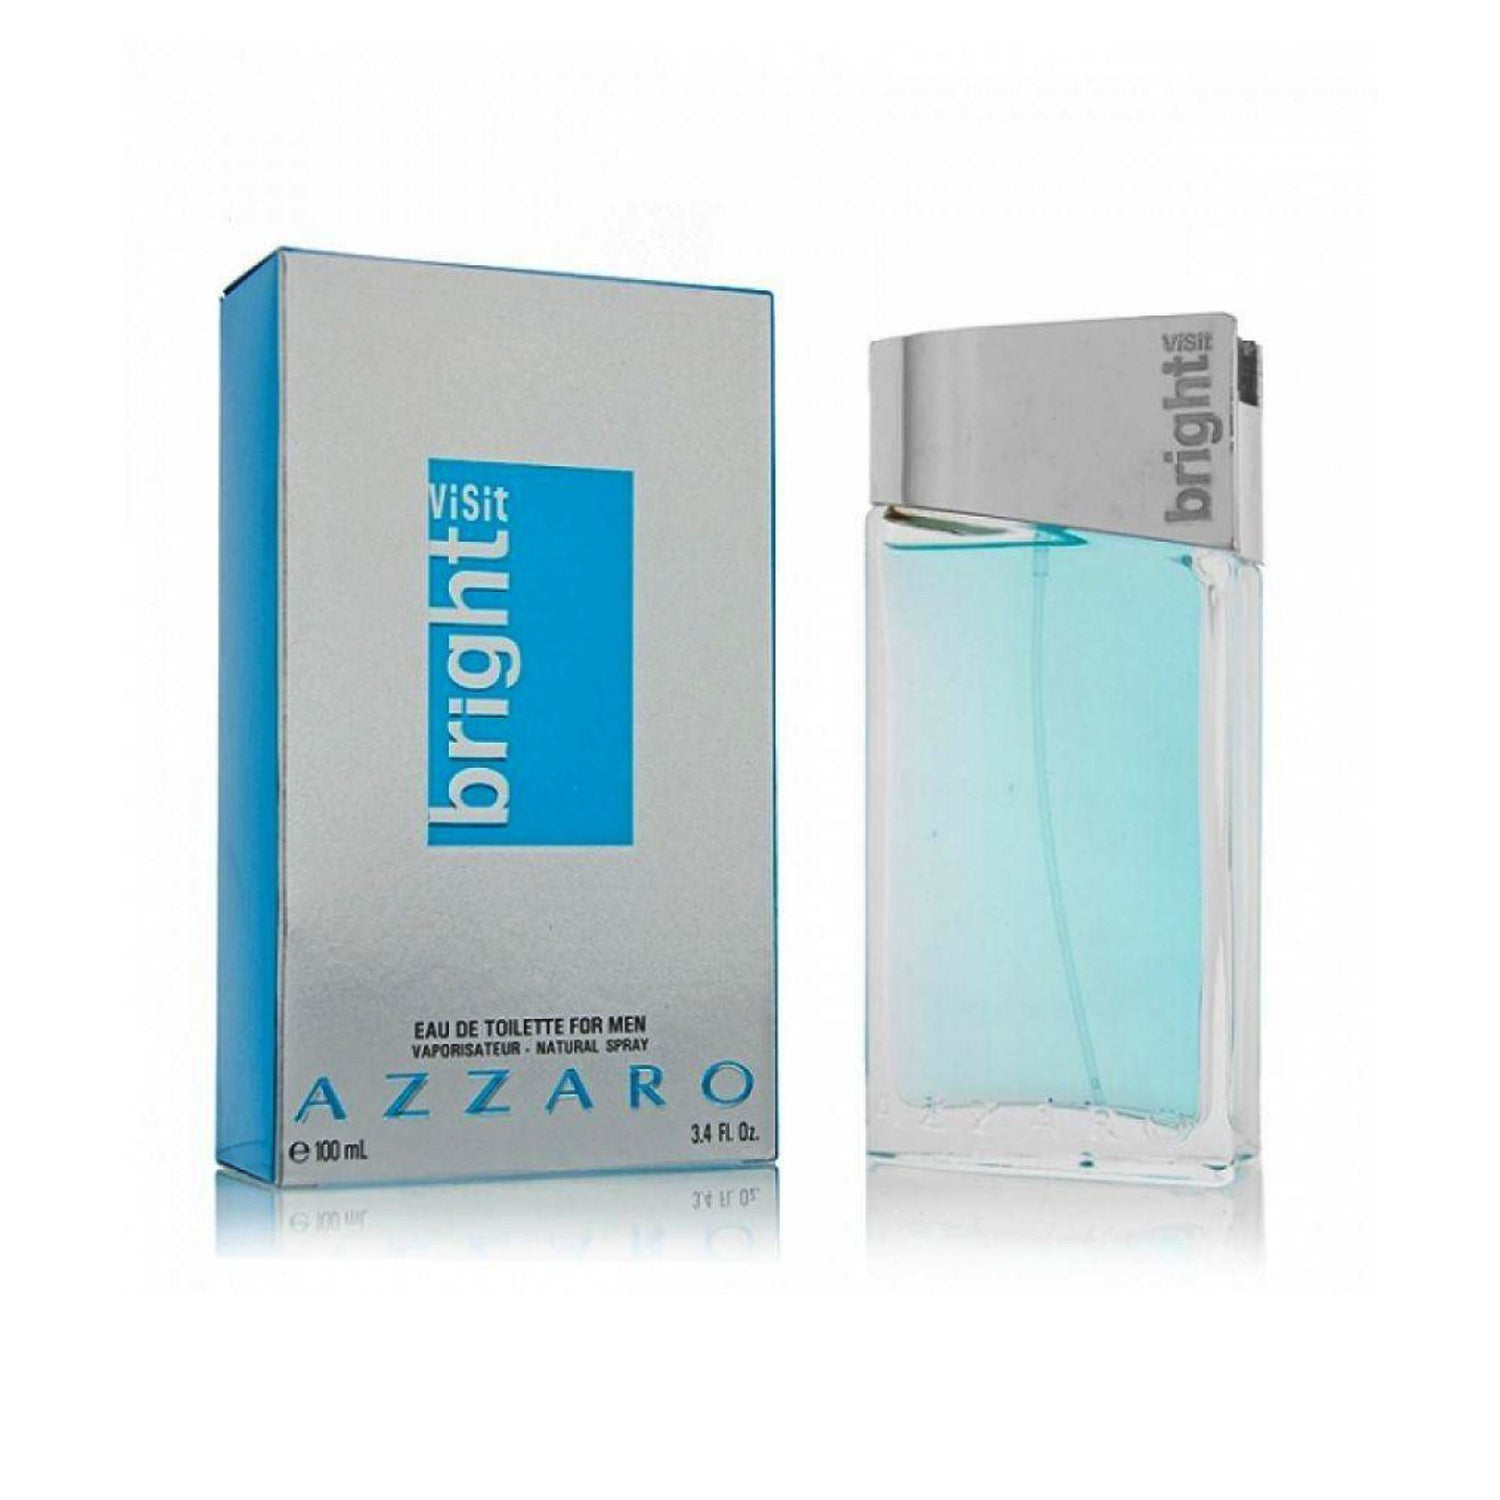 Azzaro Bright Visit 100 ml Eau De Toilette Spray For Men